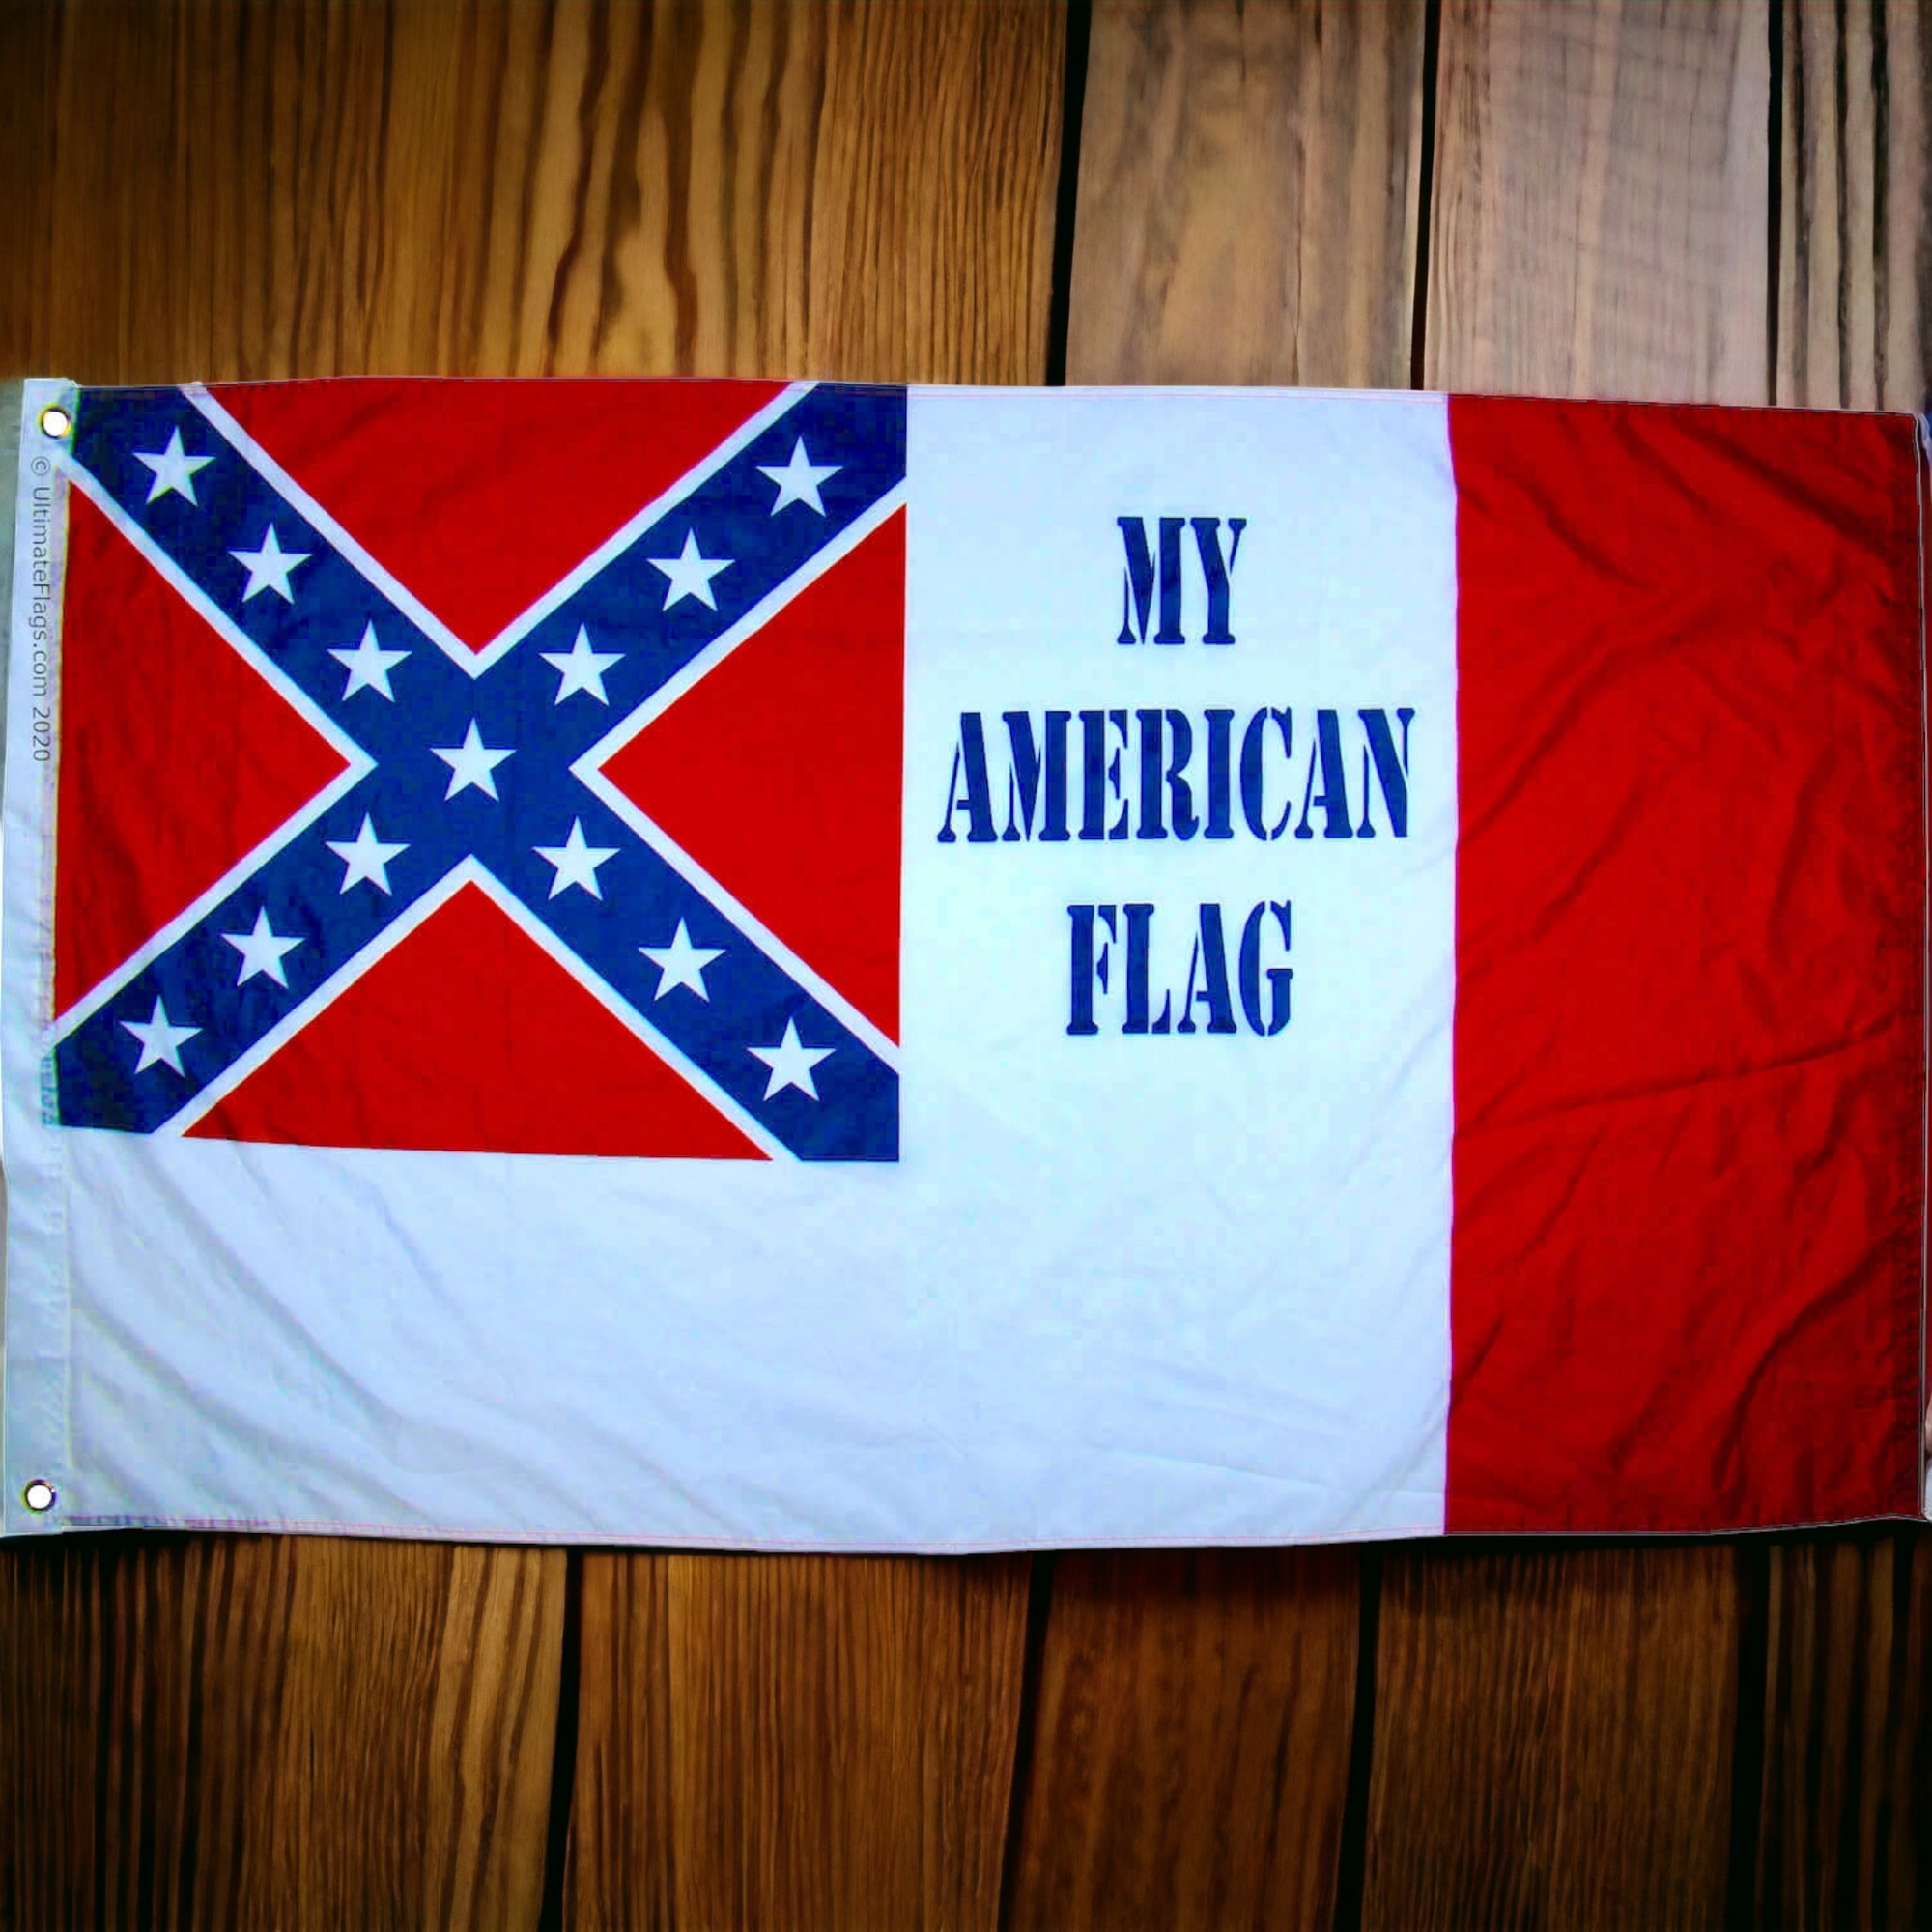 3rd National Flag - My American Flag